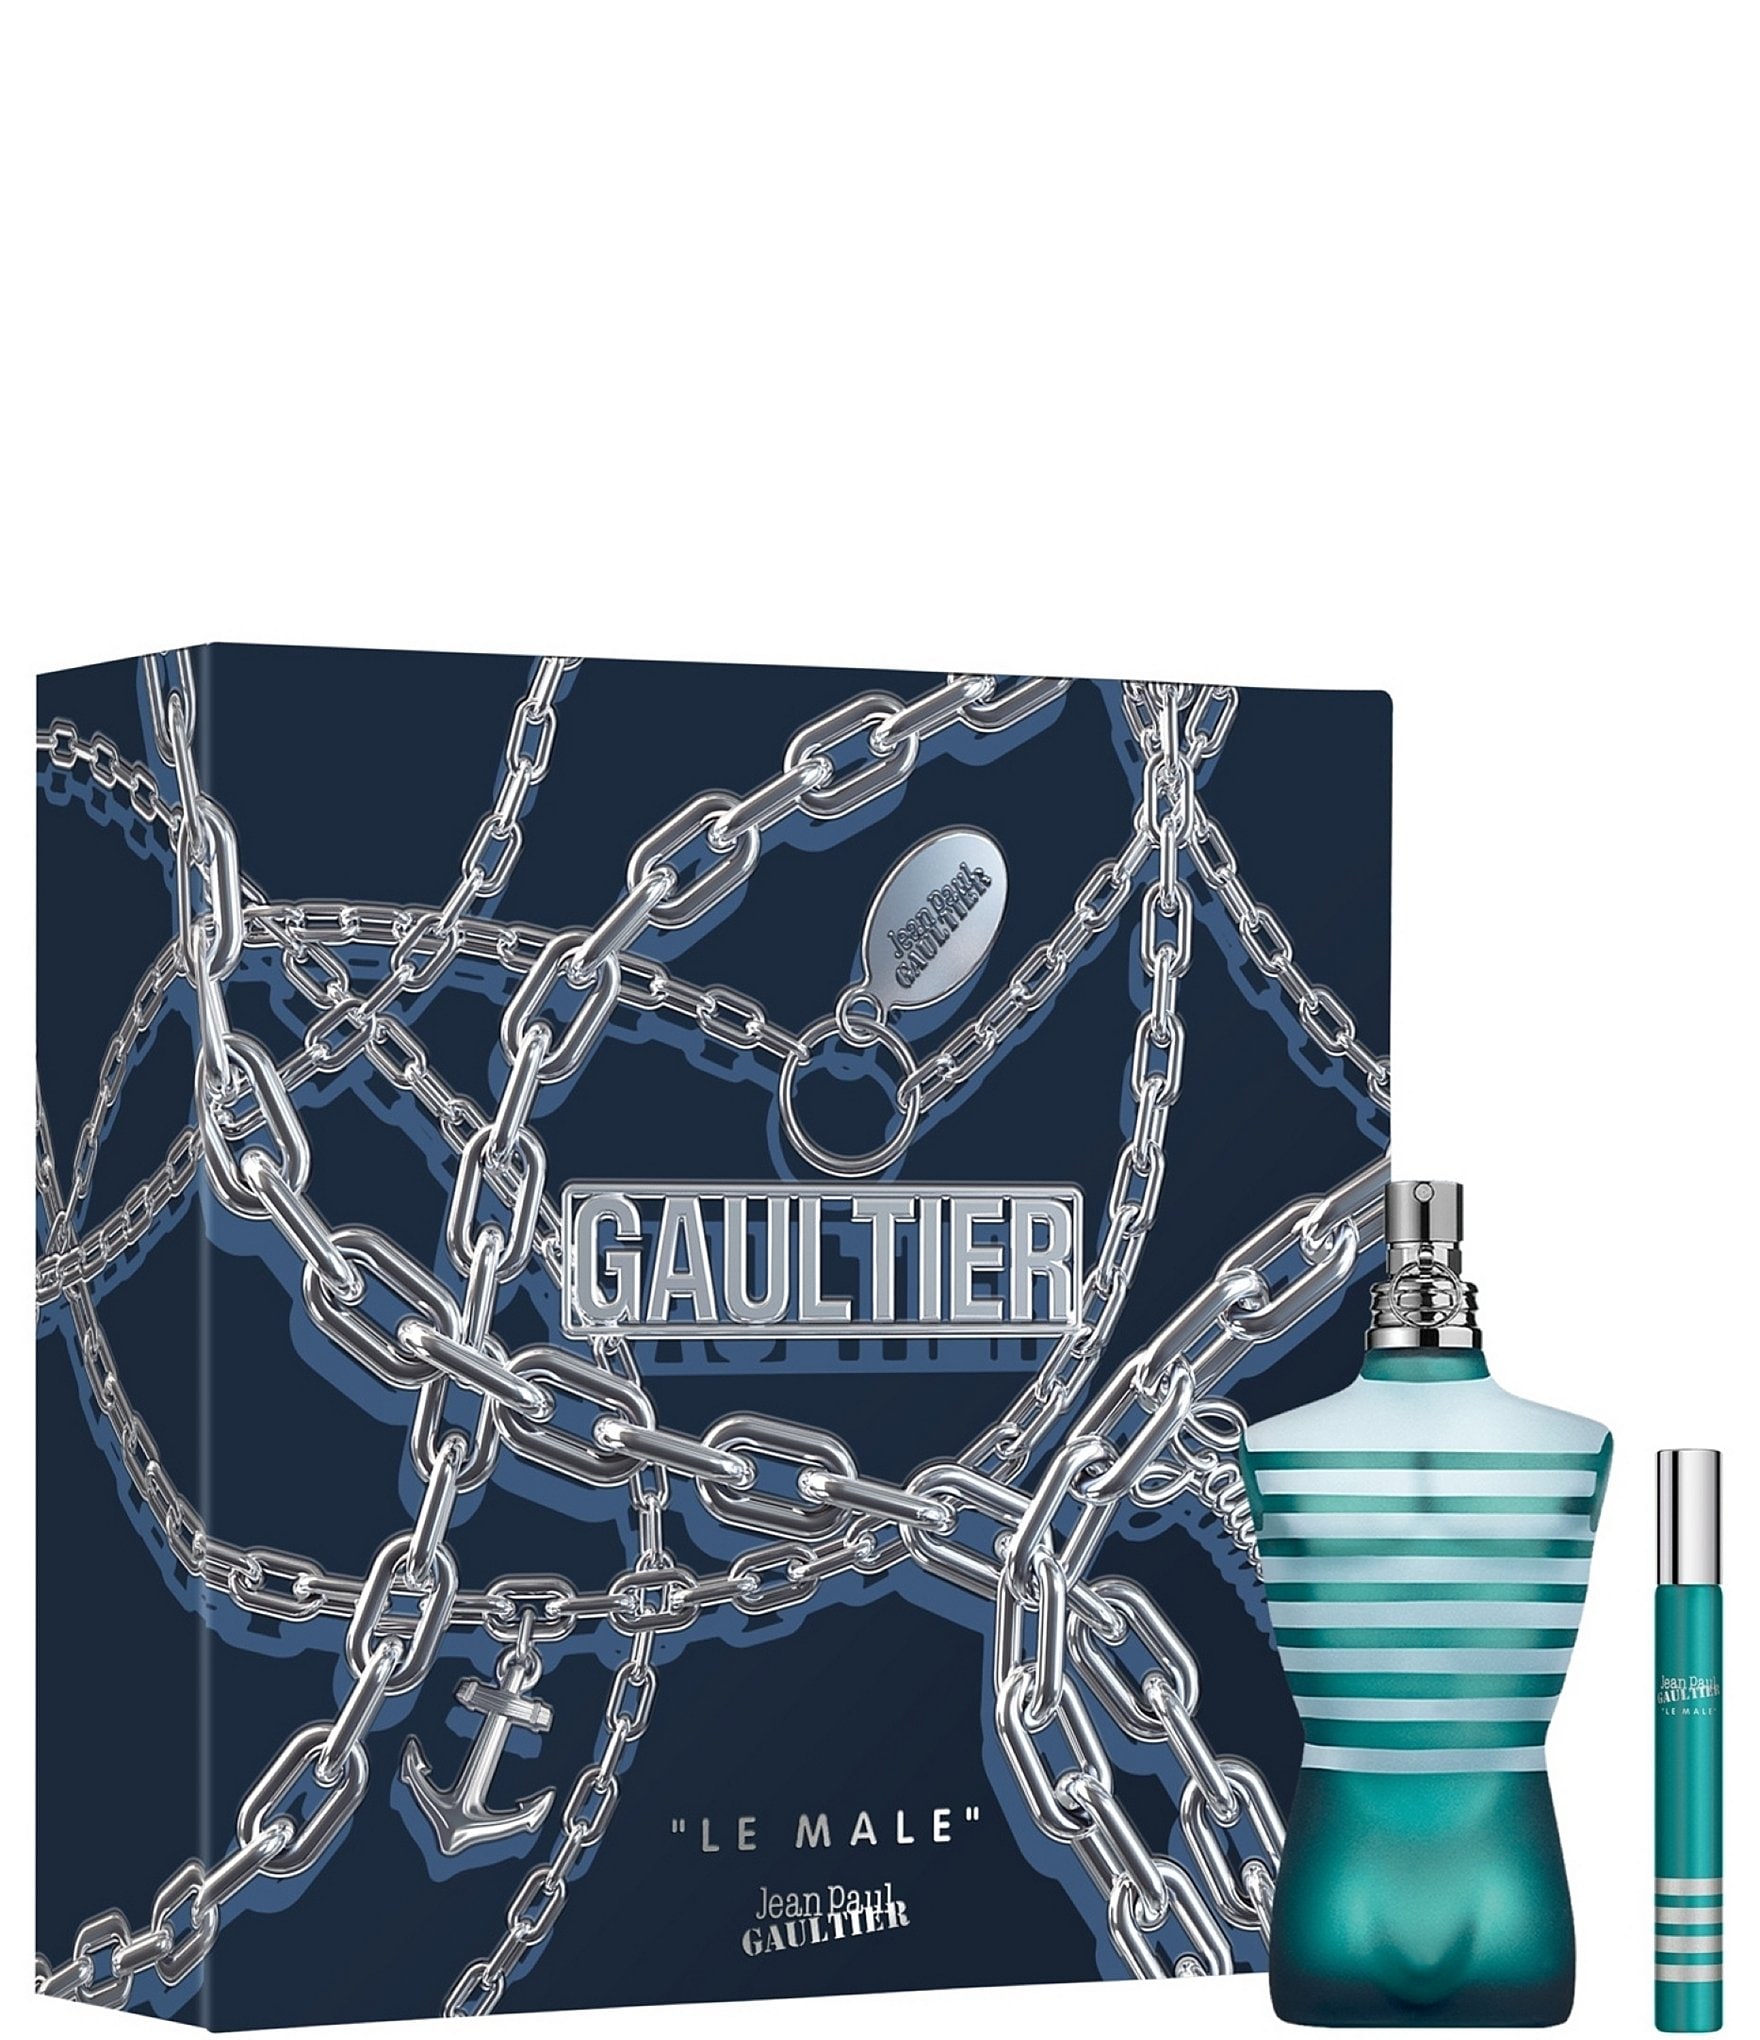 Jean Paul Gaultier Le Male Eau de Toilette Spray